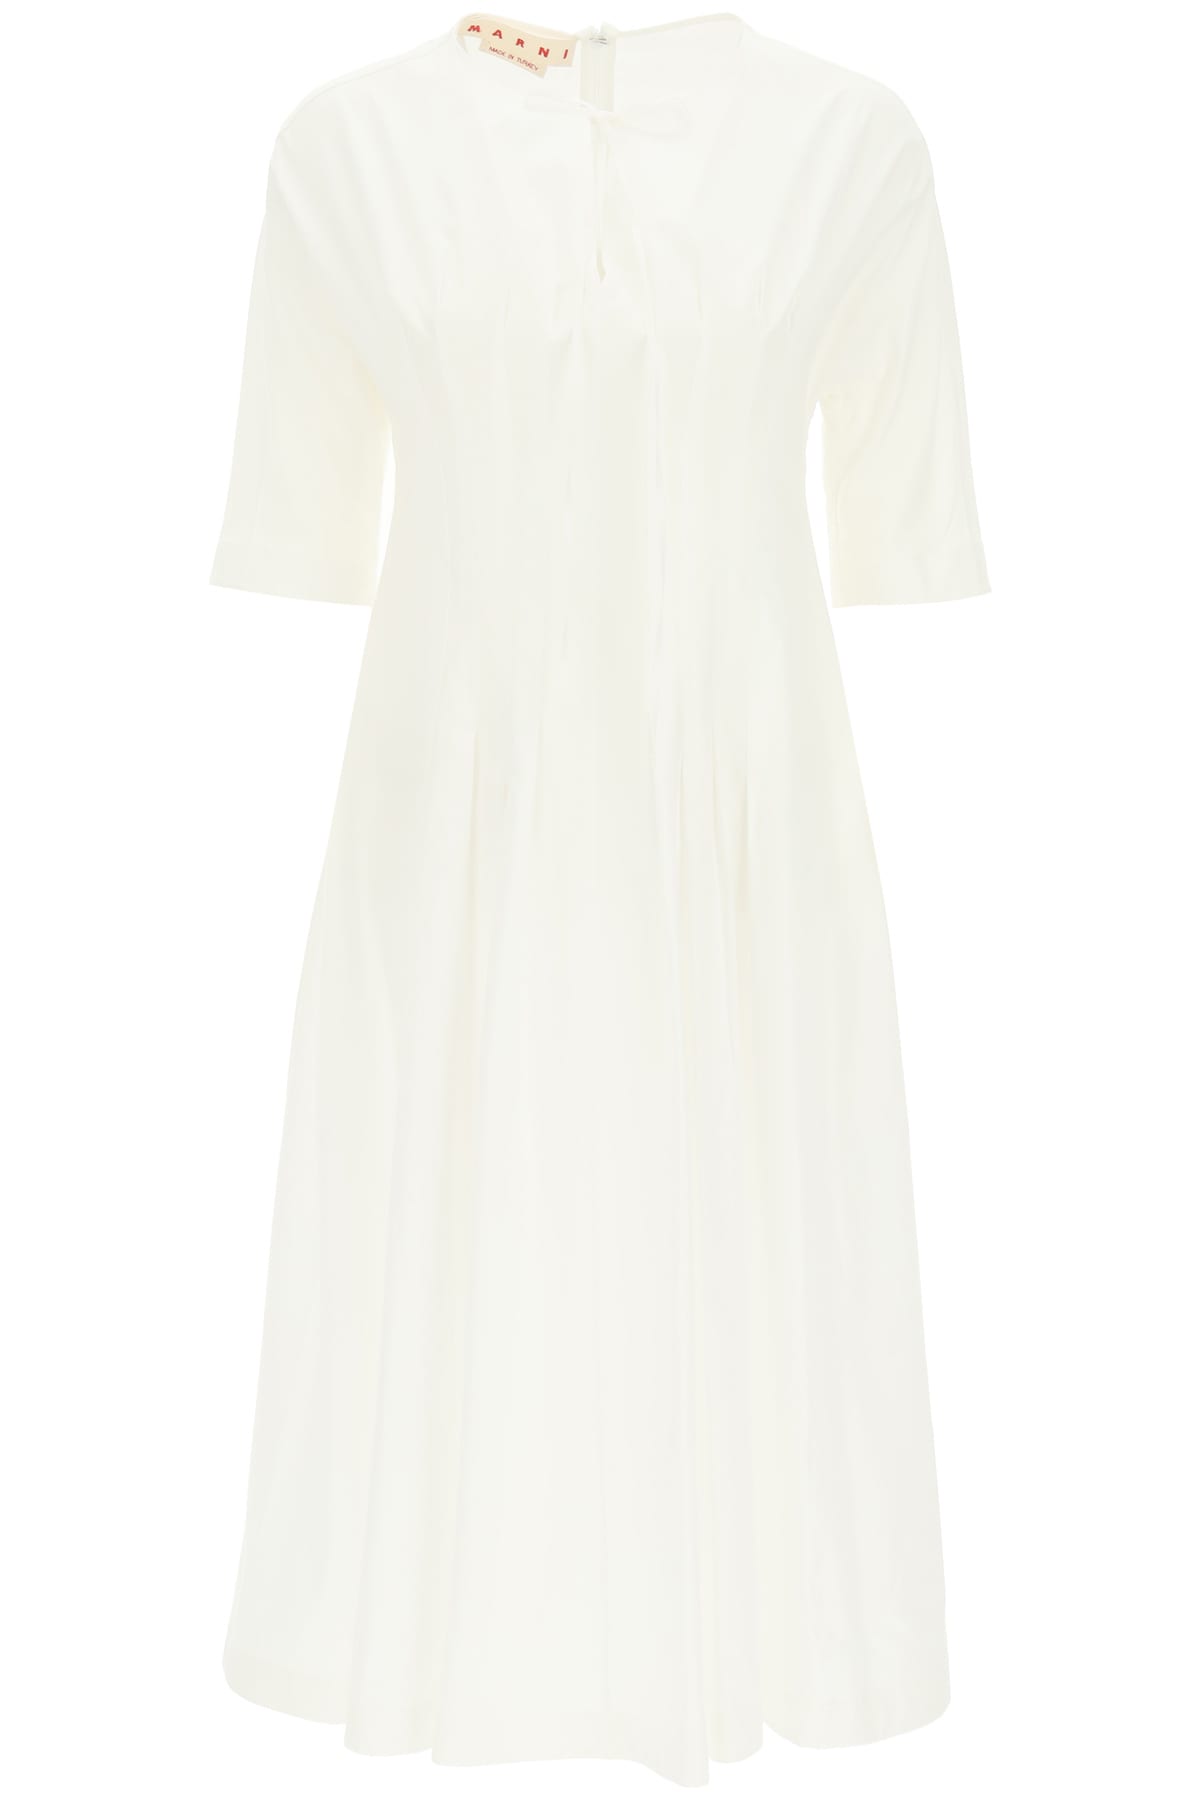 Marni Cotton Midi Dress